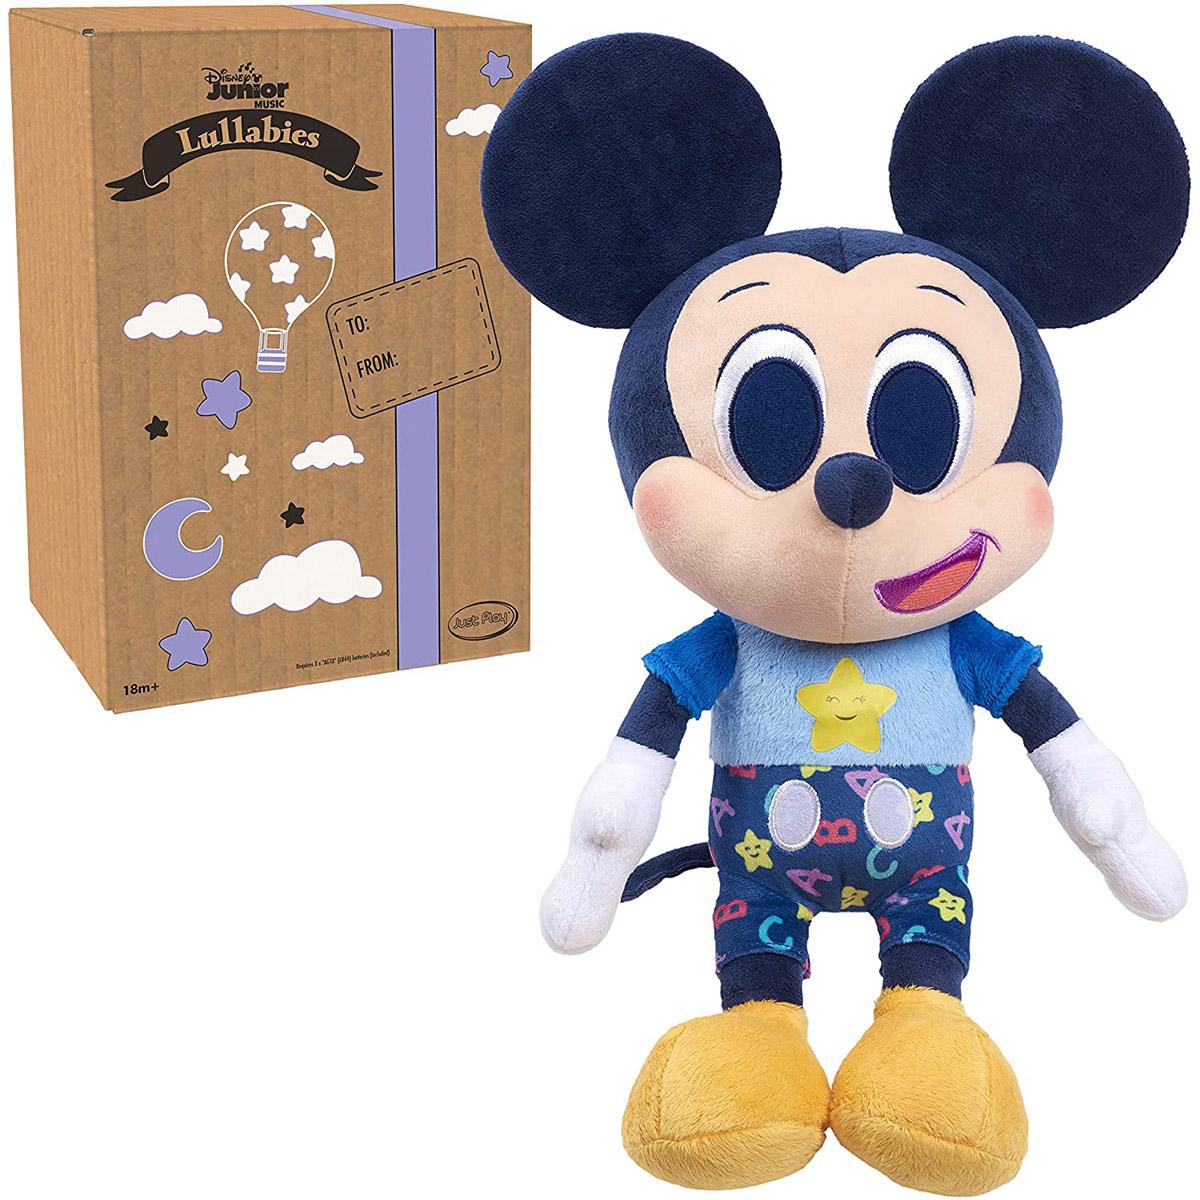 Disney Junior Music Lullabies Bedtime Mickey Mouse Plush for $10